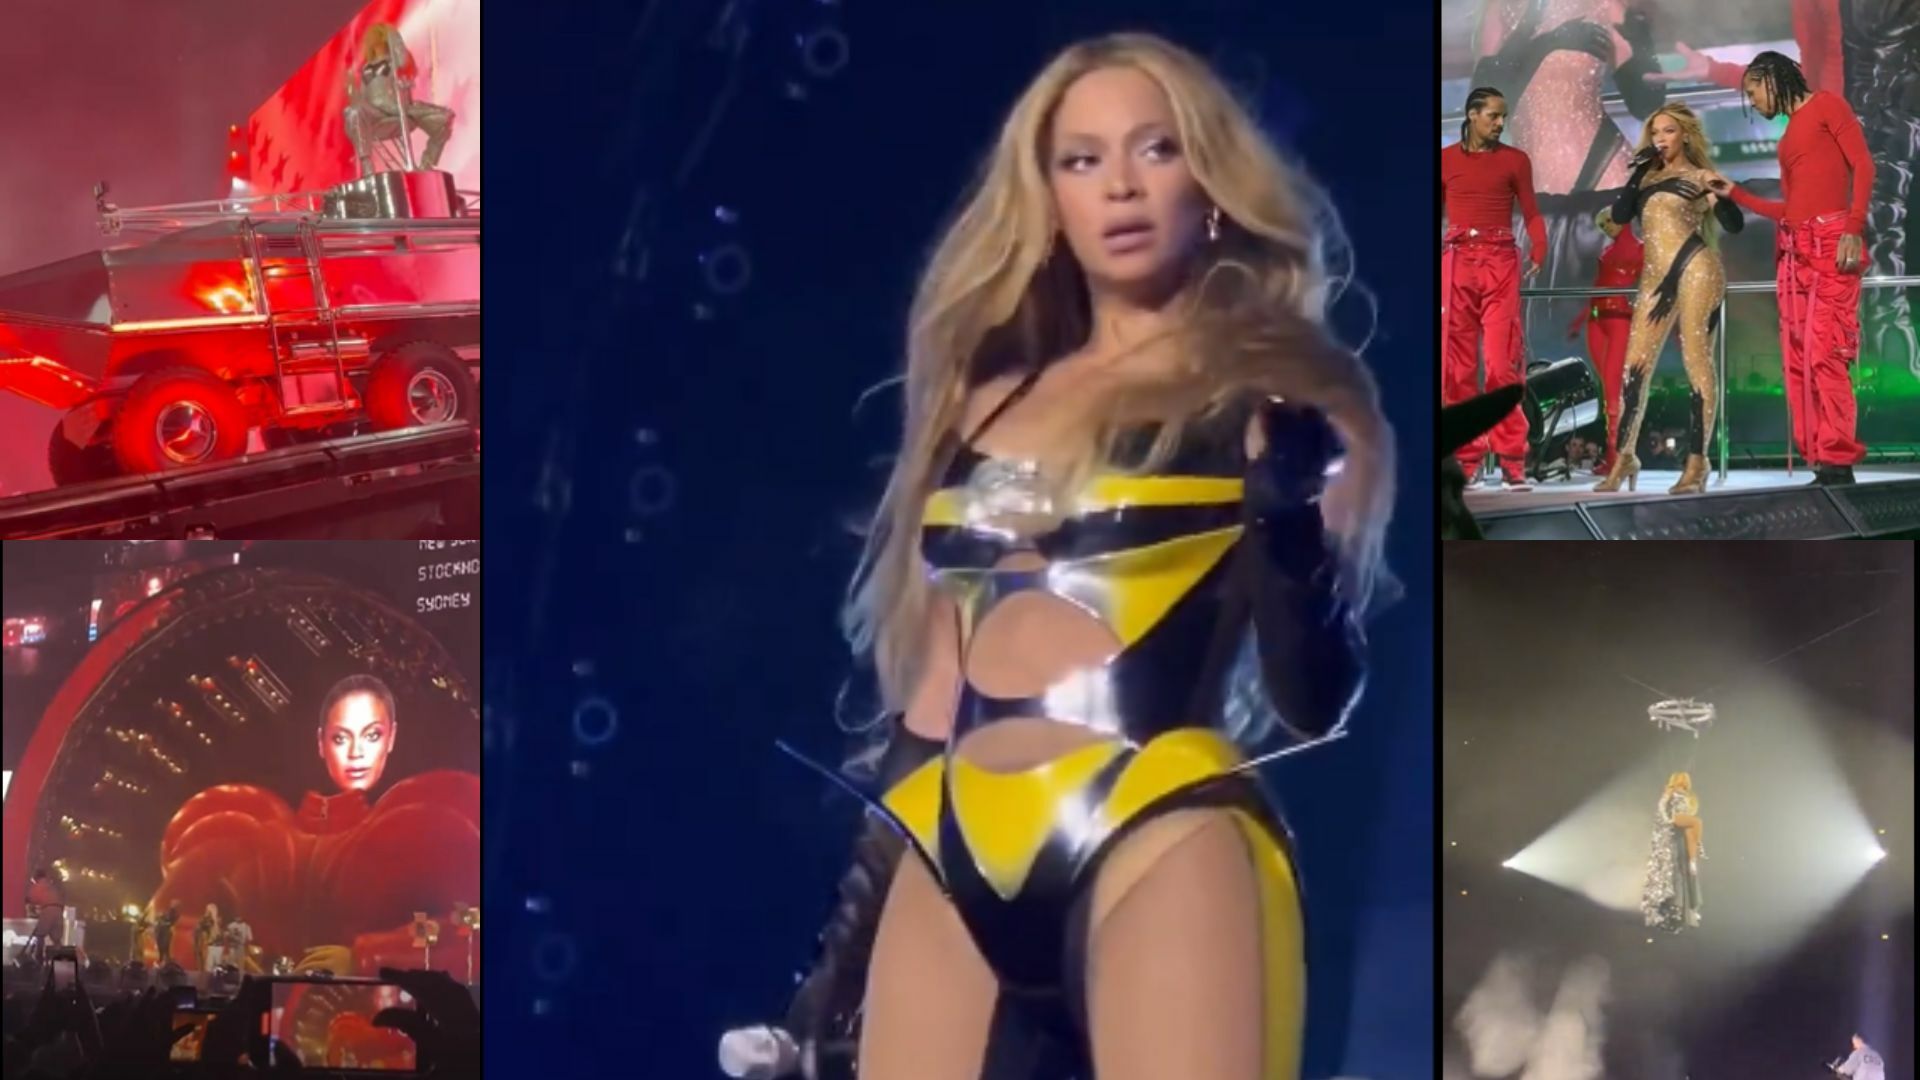 Imágenes del arranque de la gira mundial de Beyoncé impactan en redes; piden que venga a México